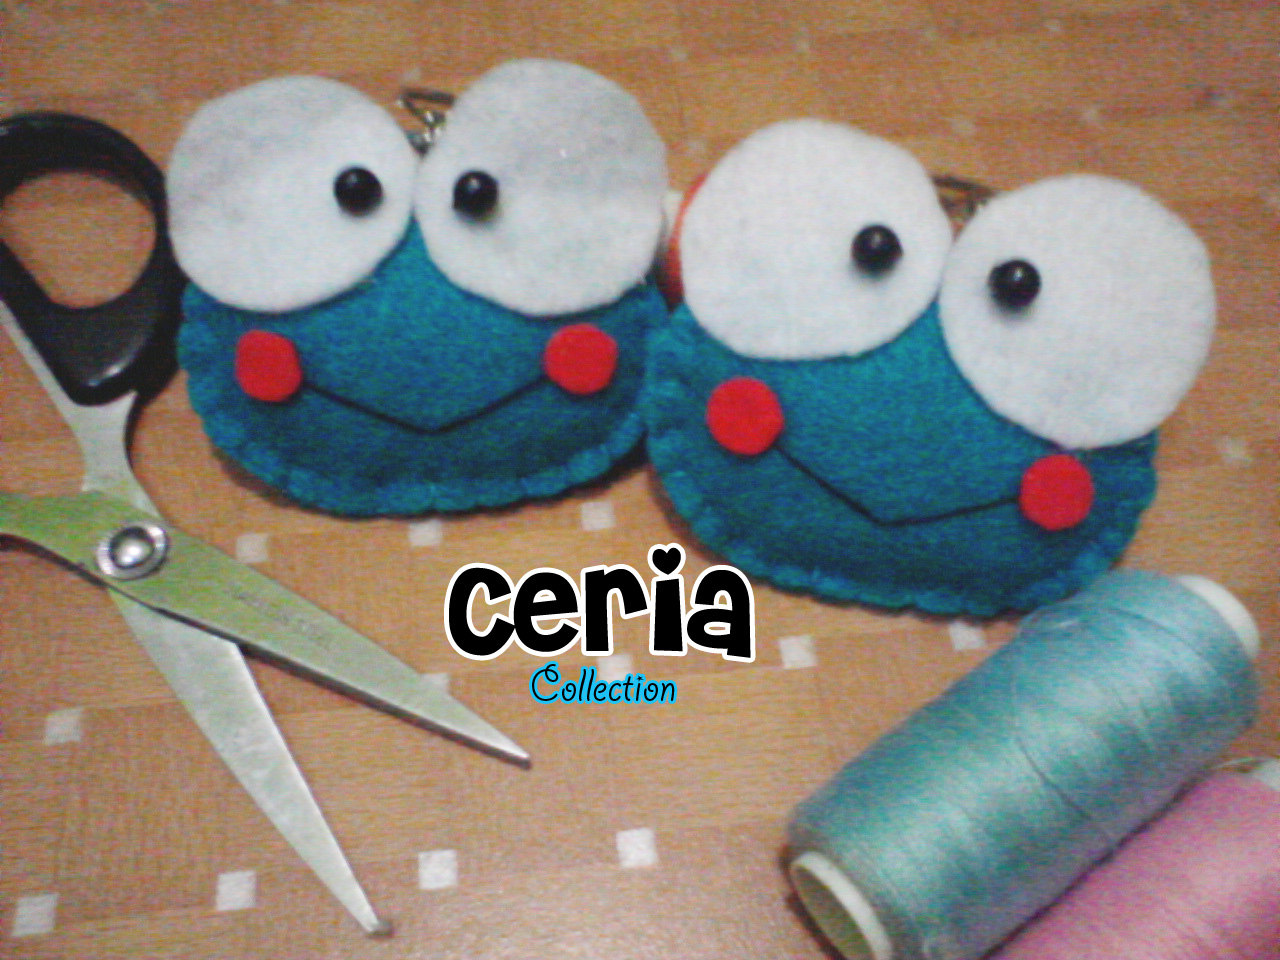 Ceria Collection Keroppi